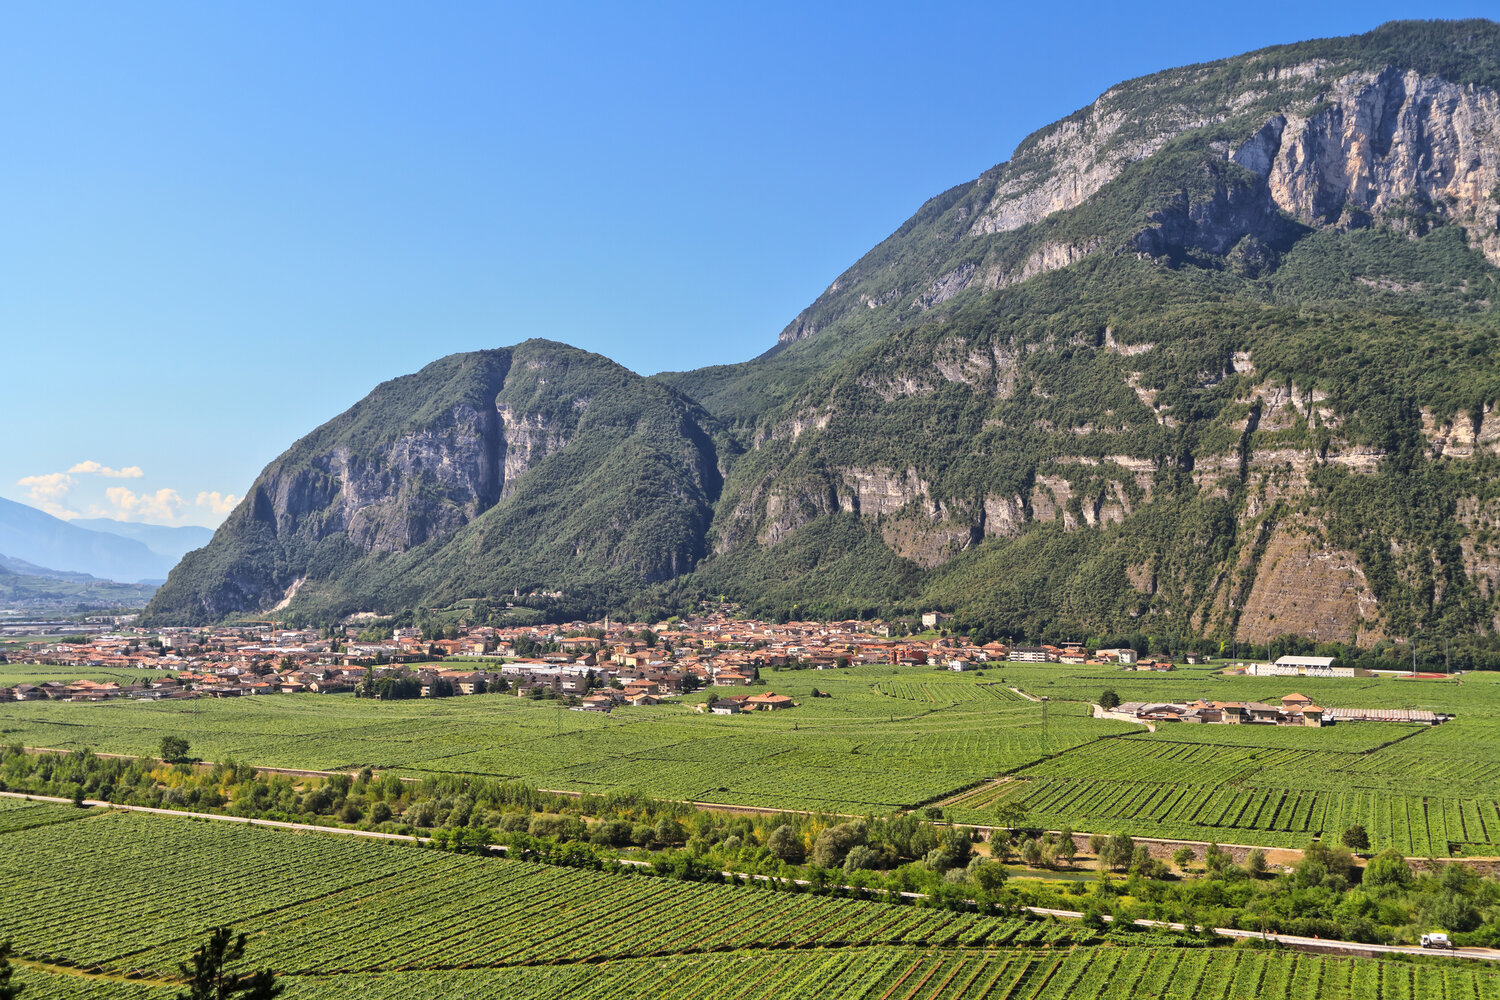 The village of Mezzolombardo.